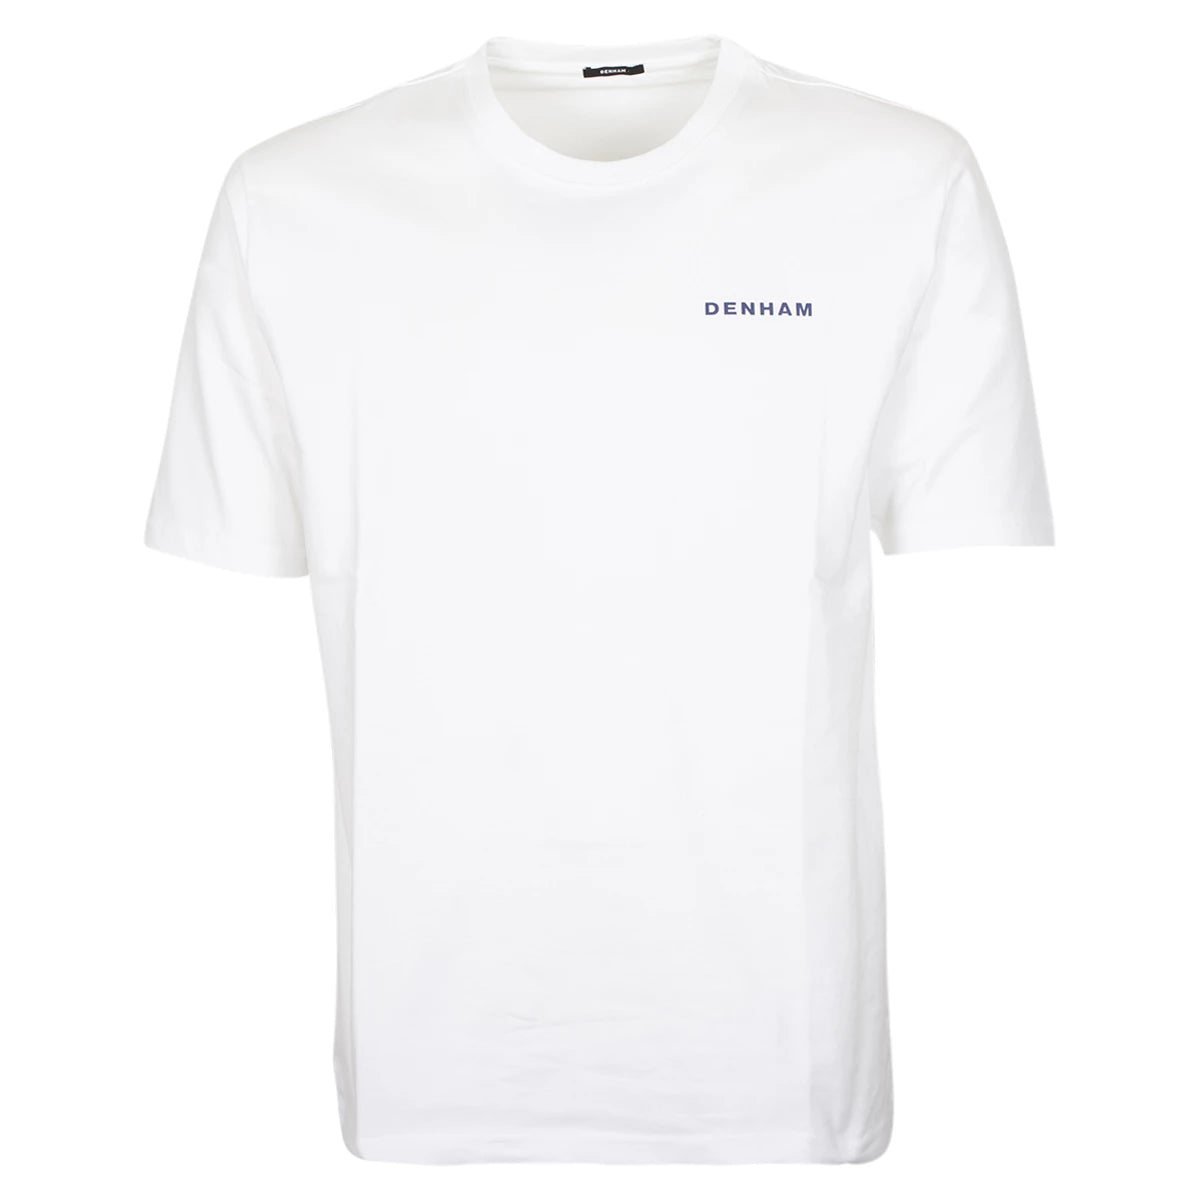 Denham t-shirt wit | Aqua indigo relax tee